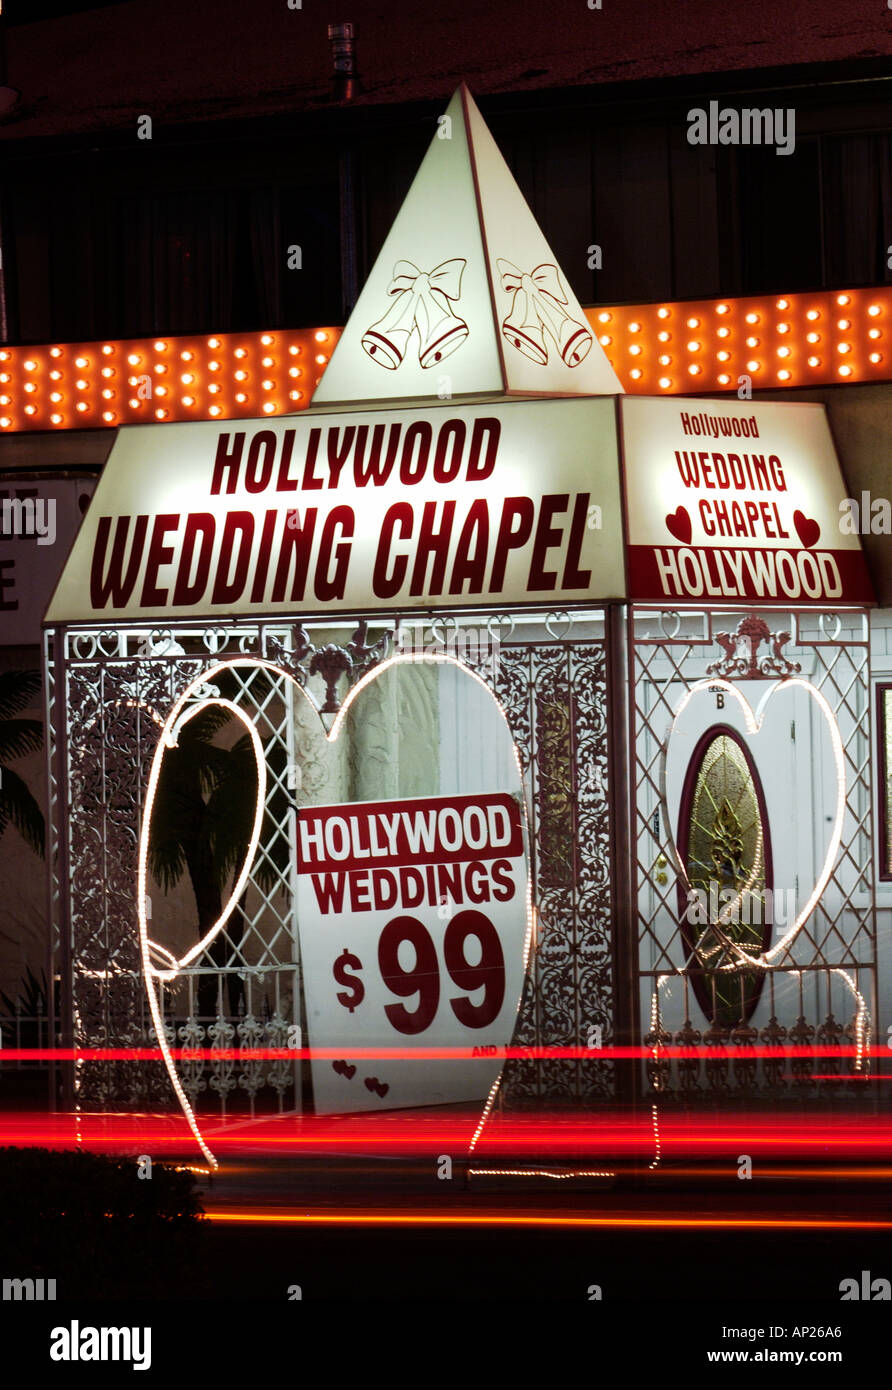 Hollywood wedding chapel Las Vegas strip Stock Photo